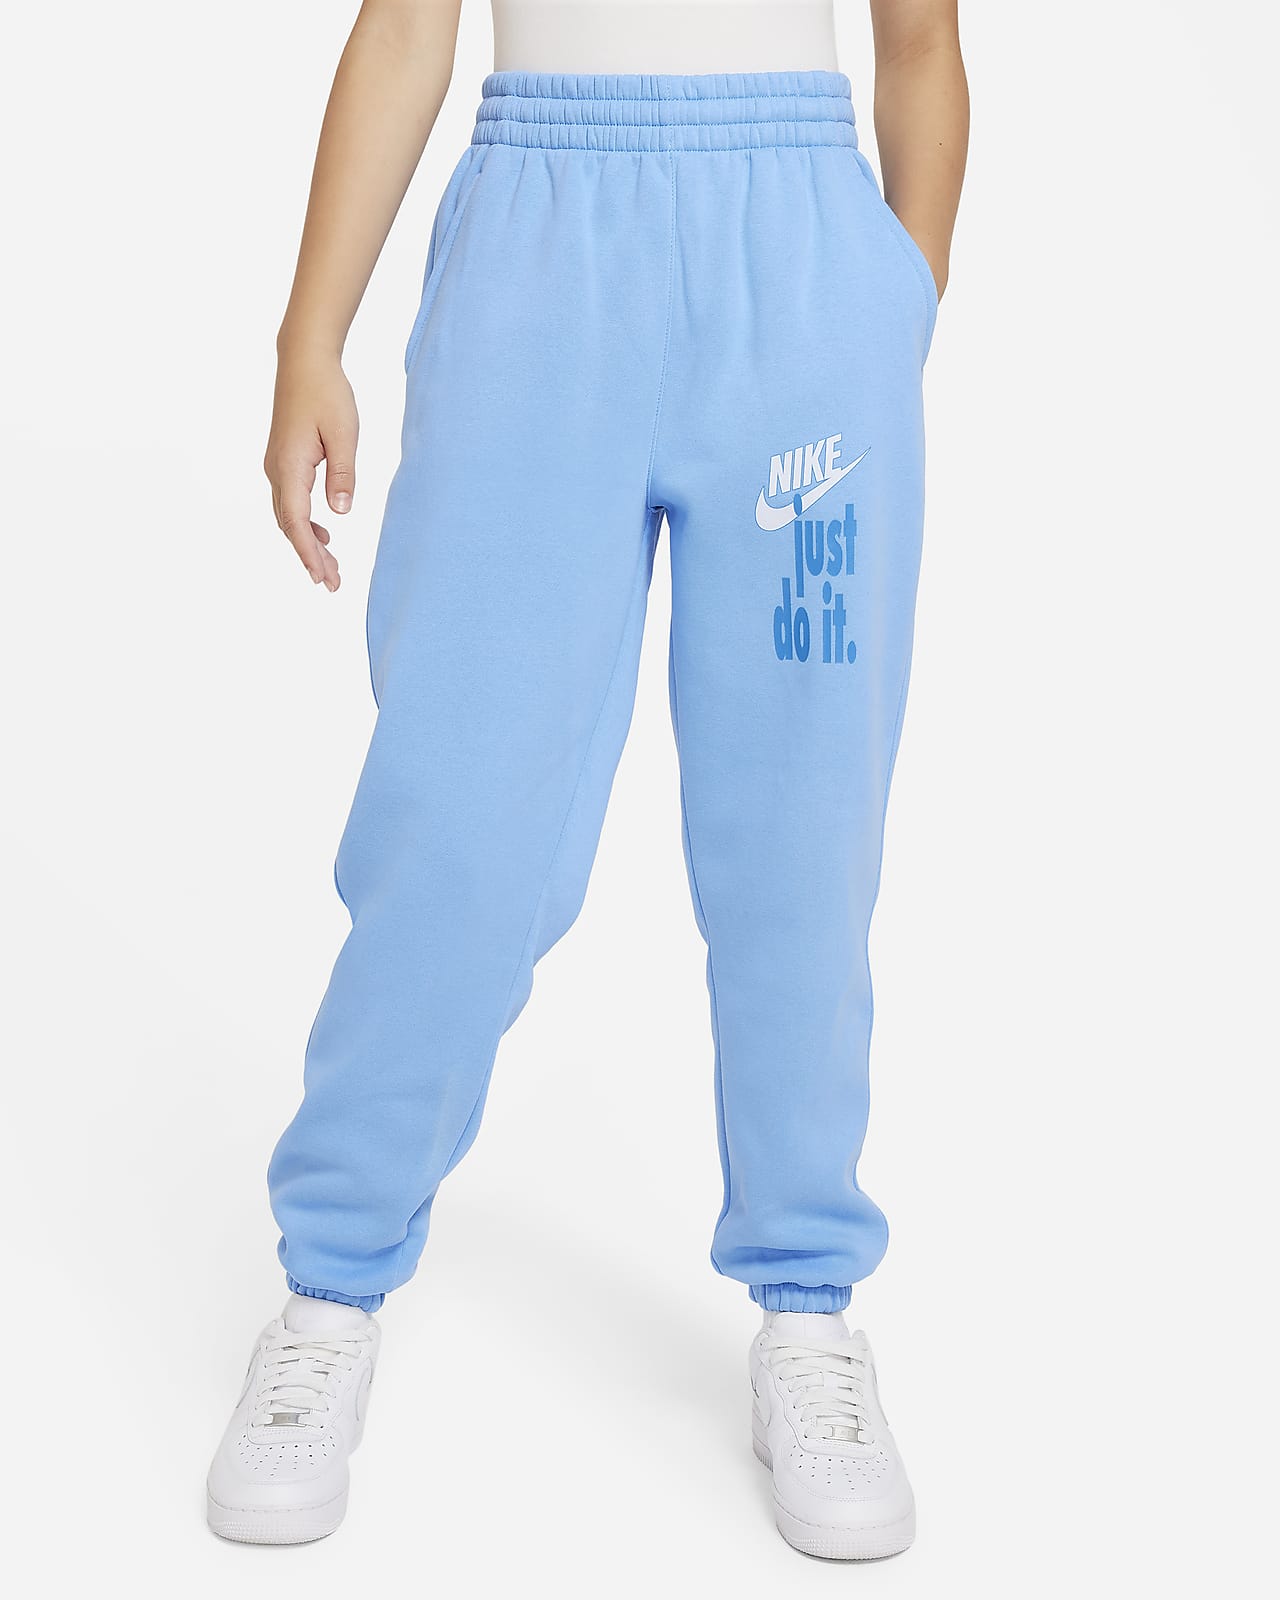 NEW Nike Sportswear Tech Fleece Jogger Pants Girls Pink CZ2595 664 - SIZE M  | eBay